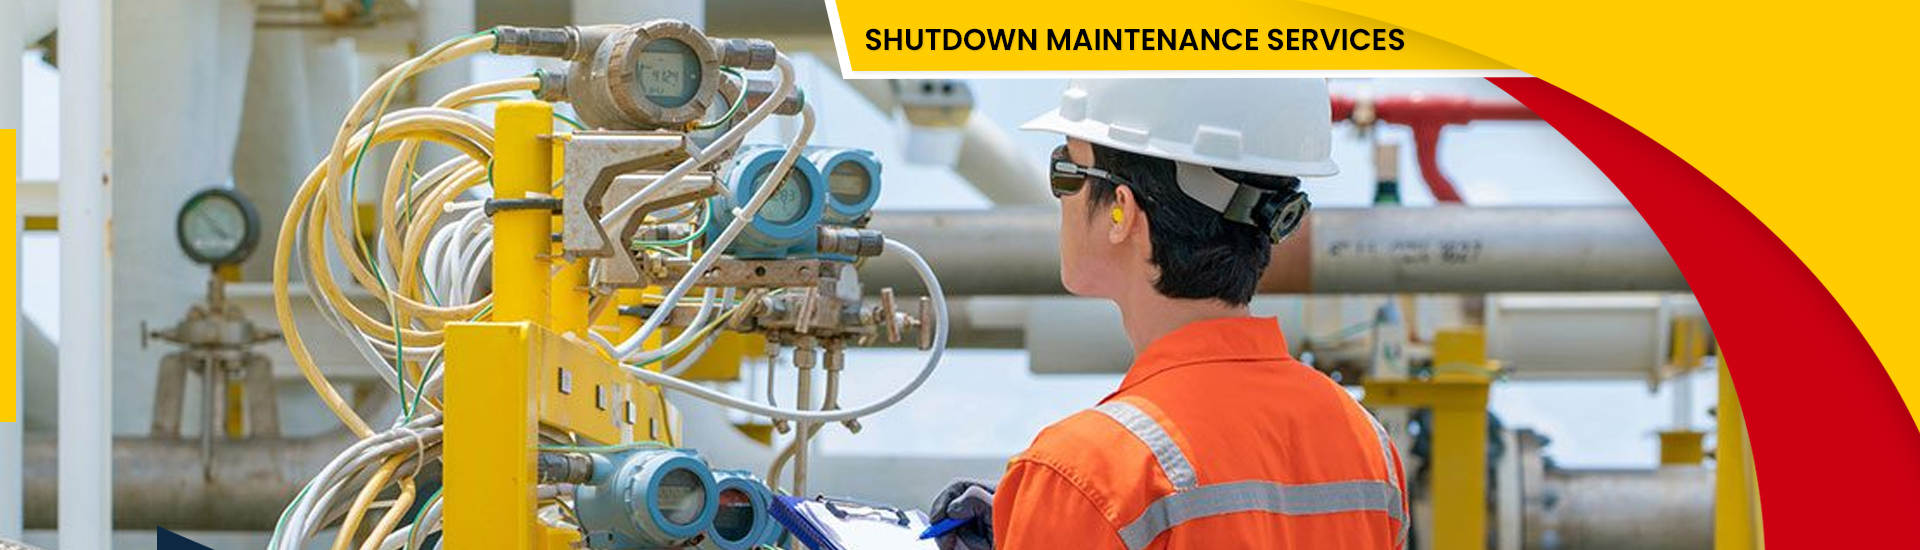 Shutdown Maintenance Services